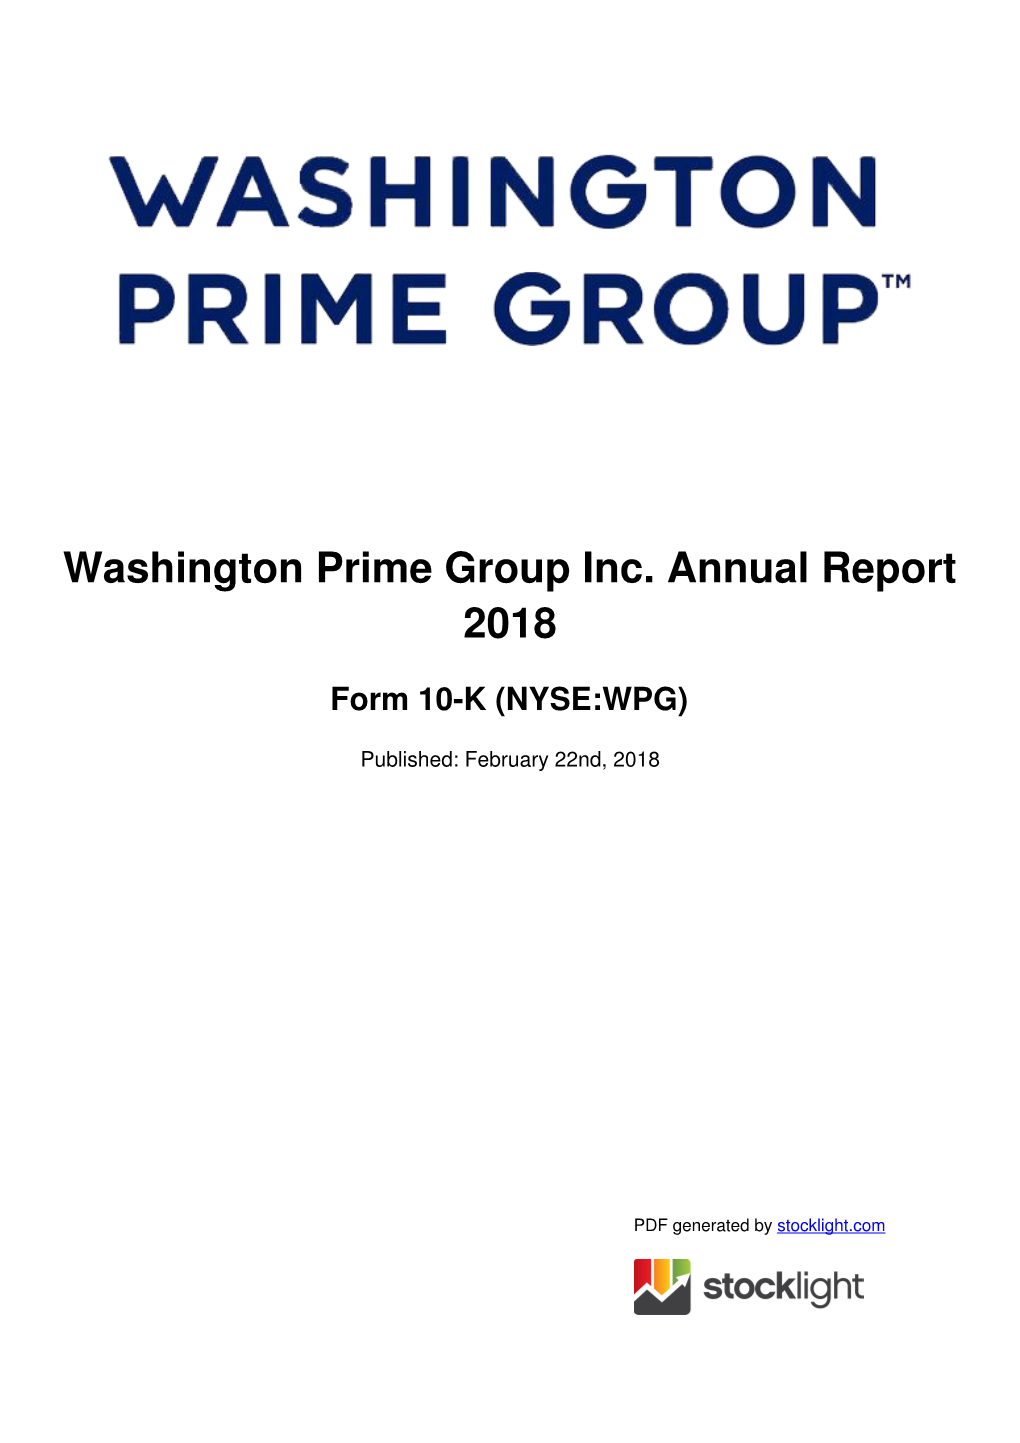 Washington Prime Group Inc. Annual Report 2018